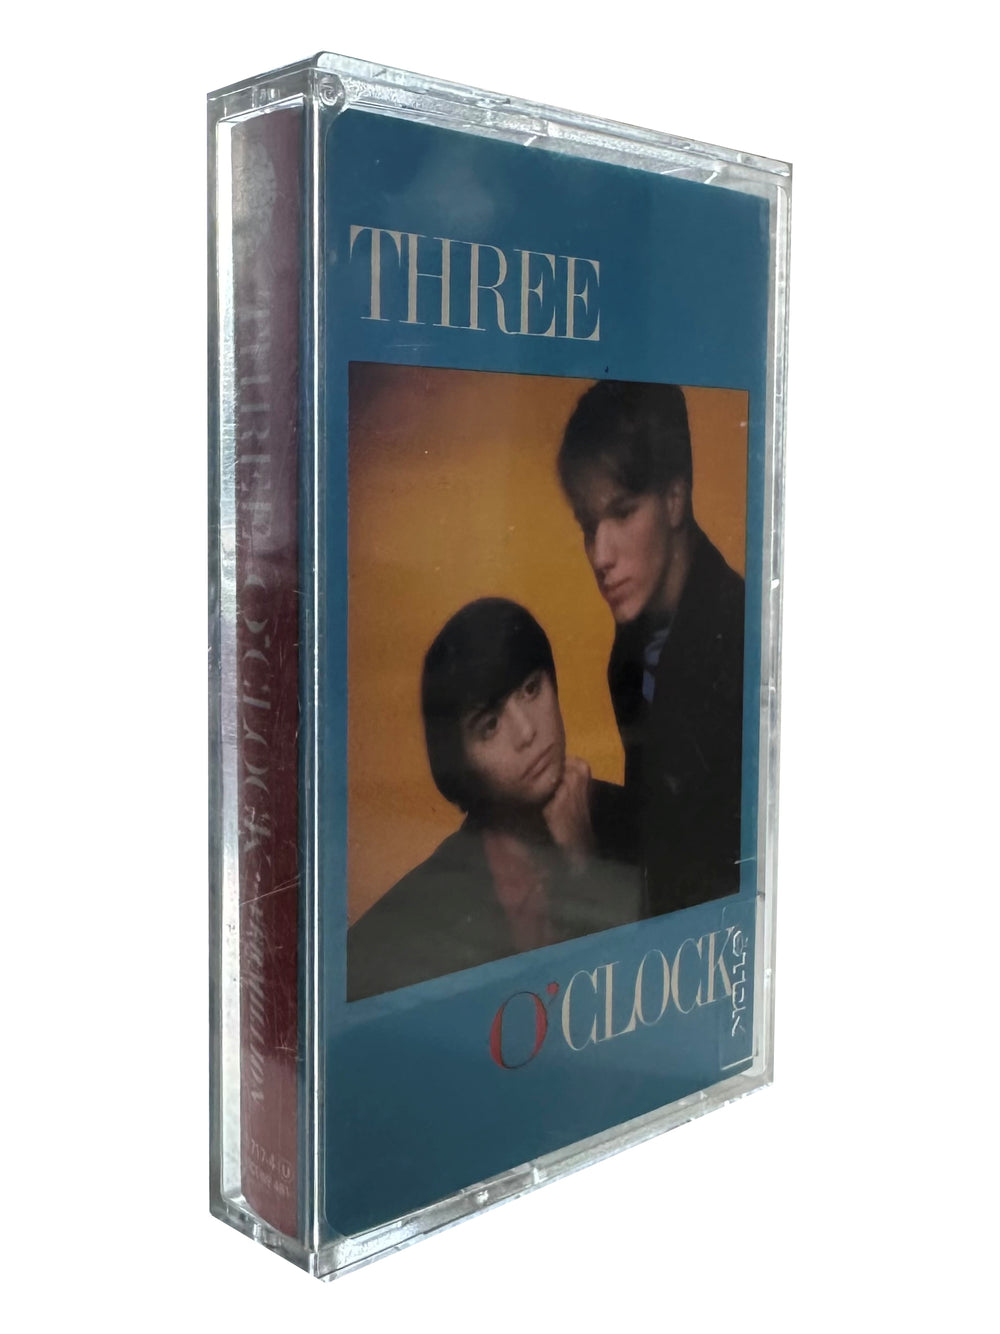 Prince – Three O'Clock Vermillion Tape Cassette Album UK Preloved: 1988